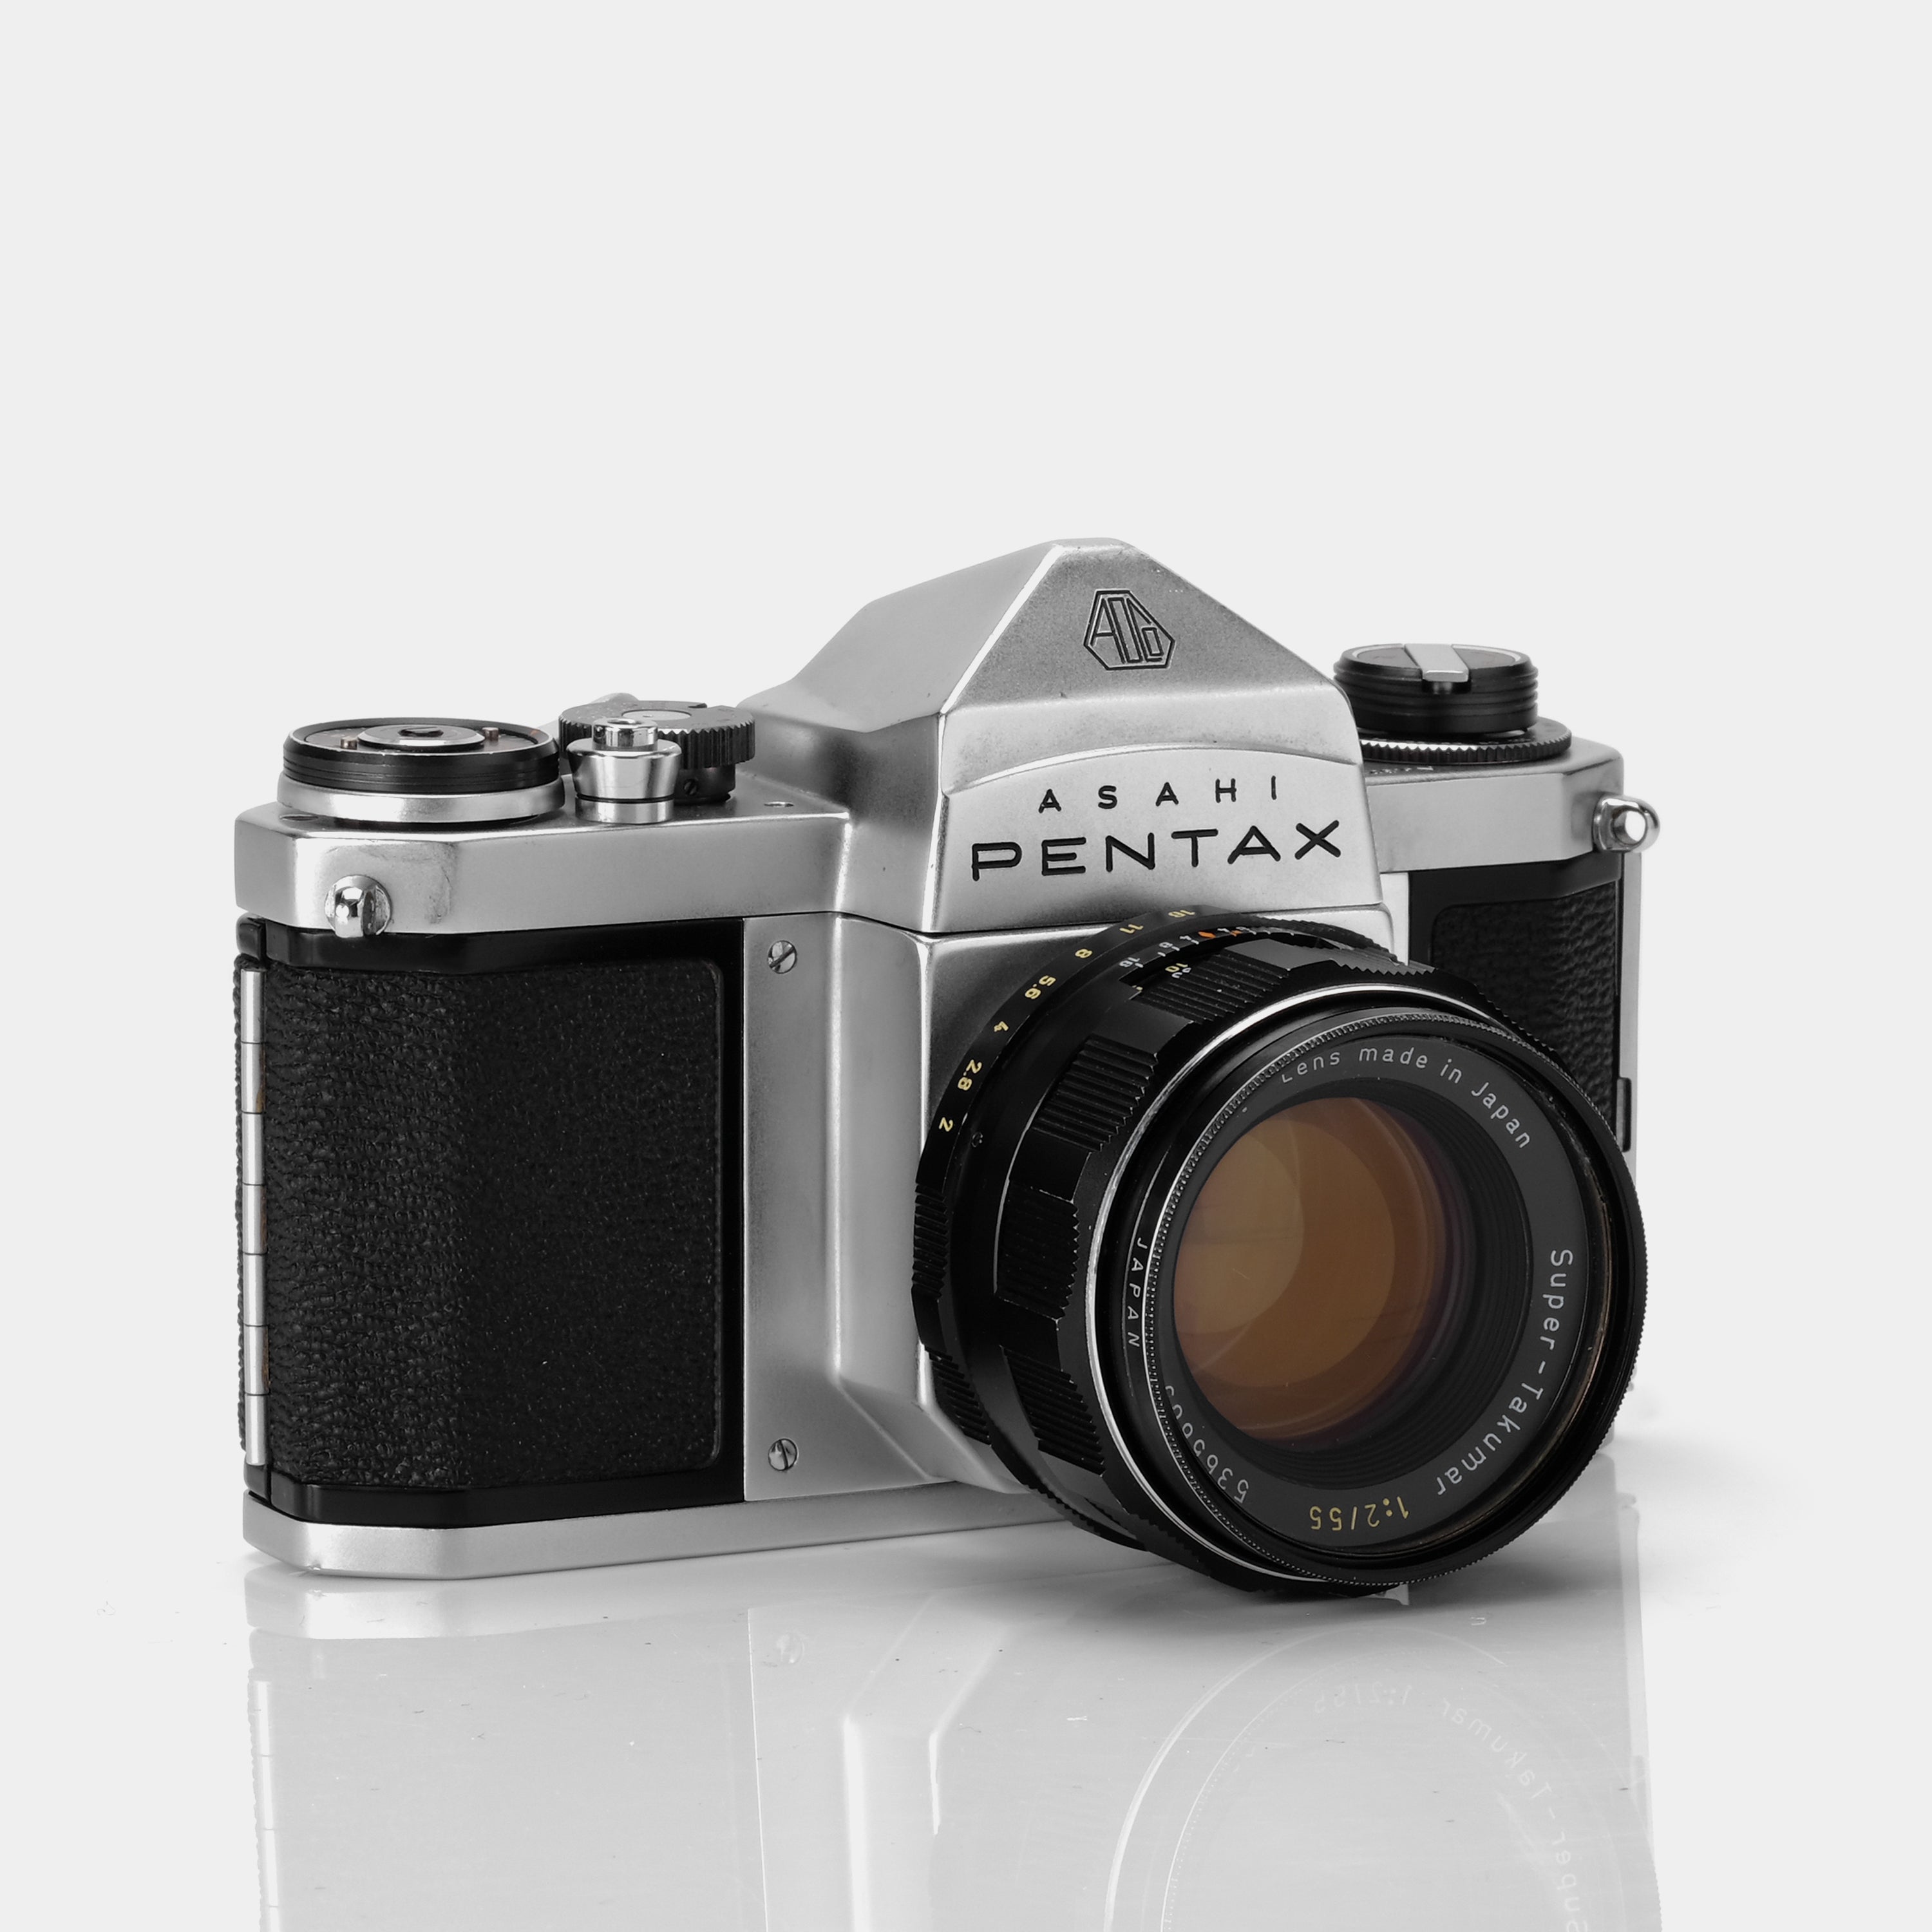 Asahi Pentax S3 35mm SLR Film Camera